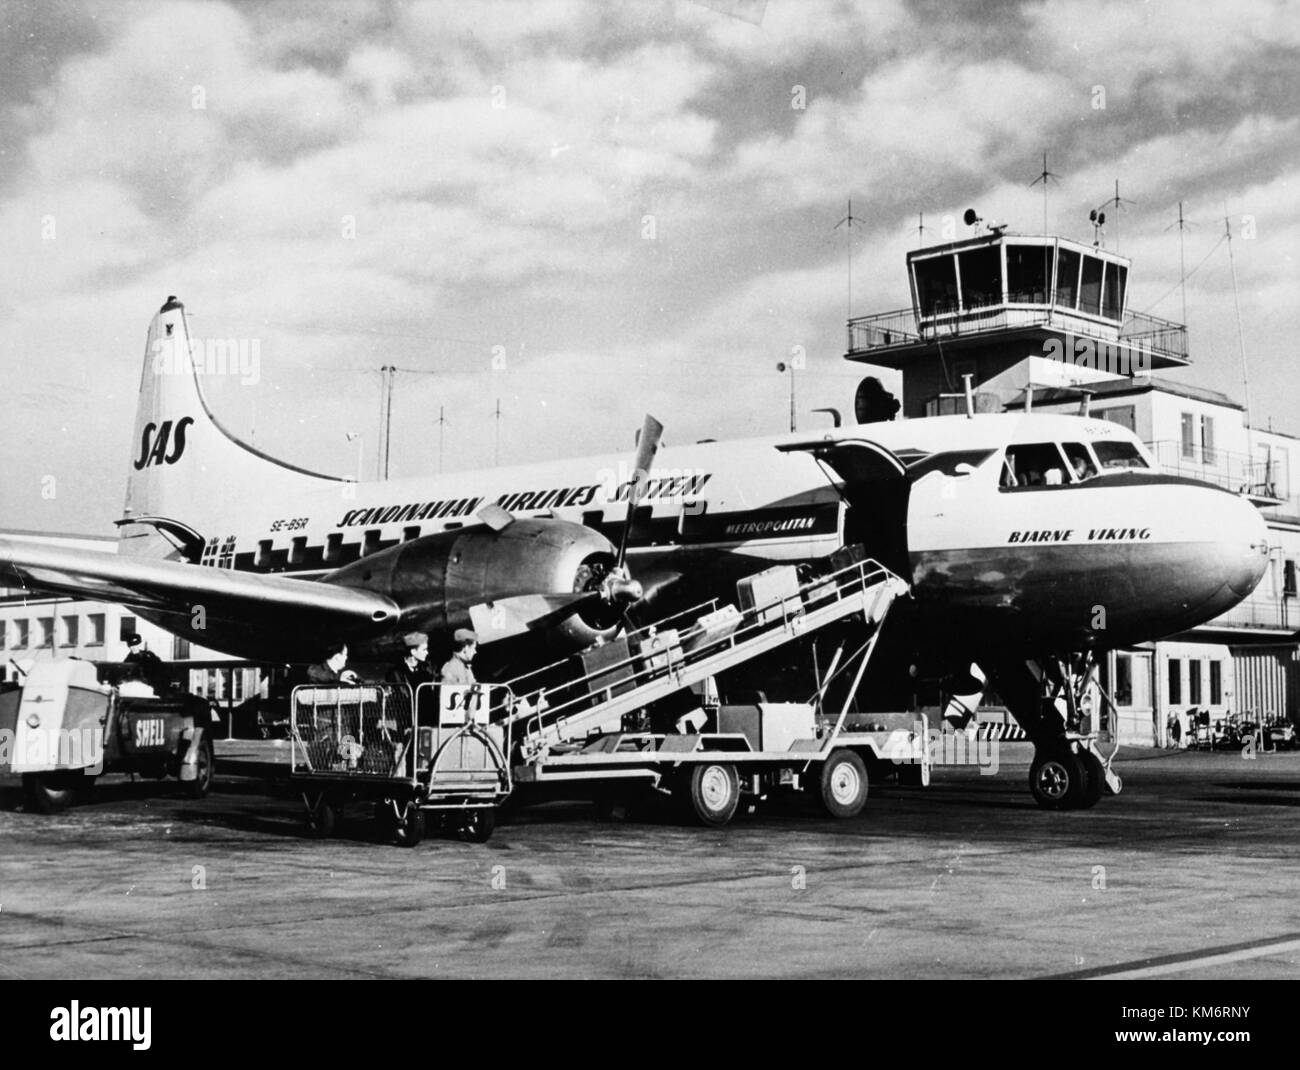 SAS Convair CV 440 Metropolitan, Bjarne Viking SE BSR am Flughafen Bromma Ende der 1950er Jahre Stockfoto